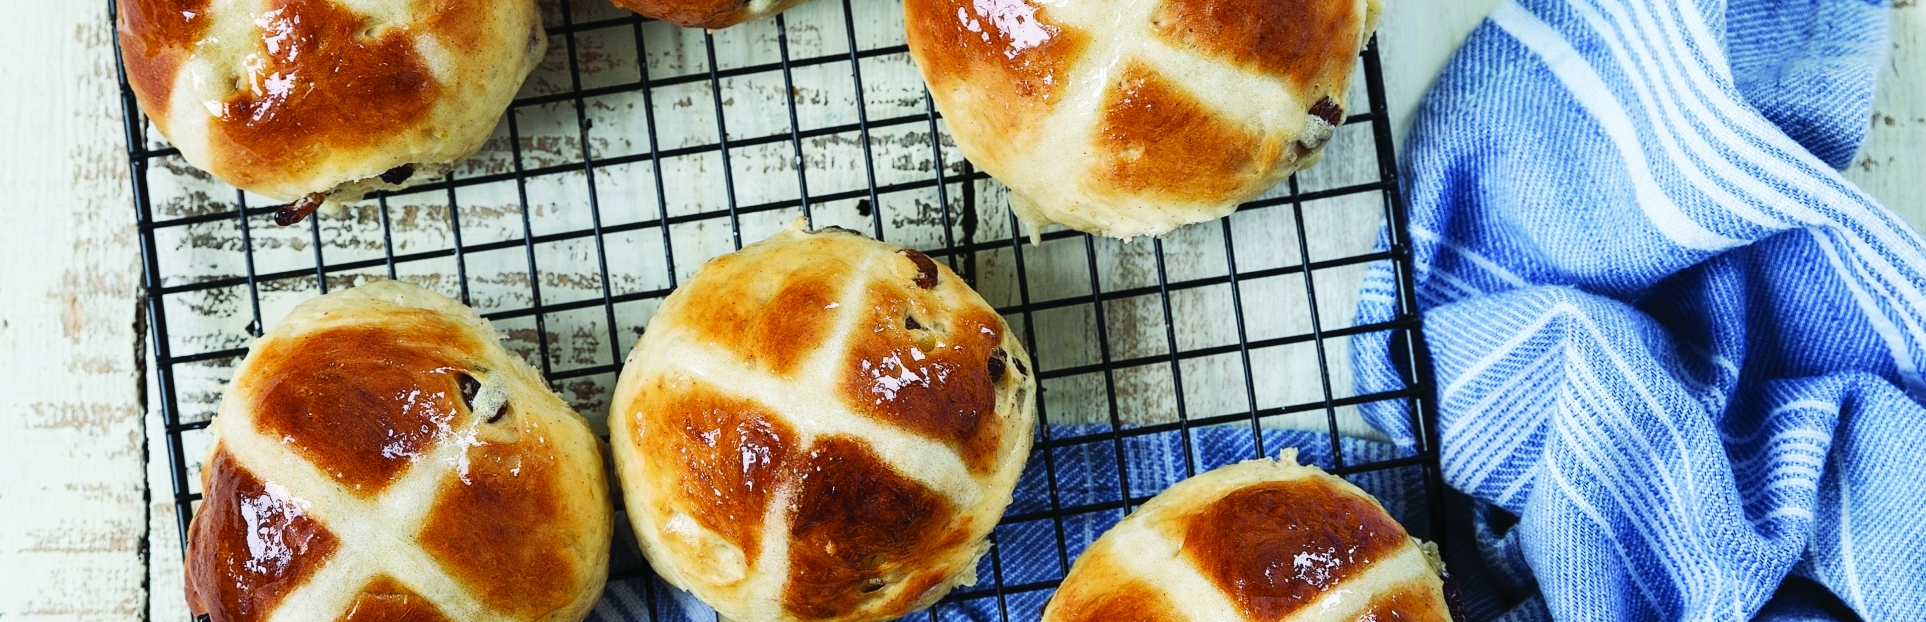 an image of hot cross buns